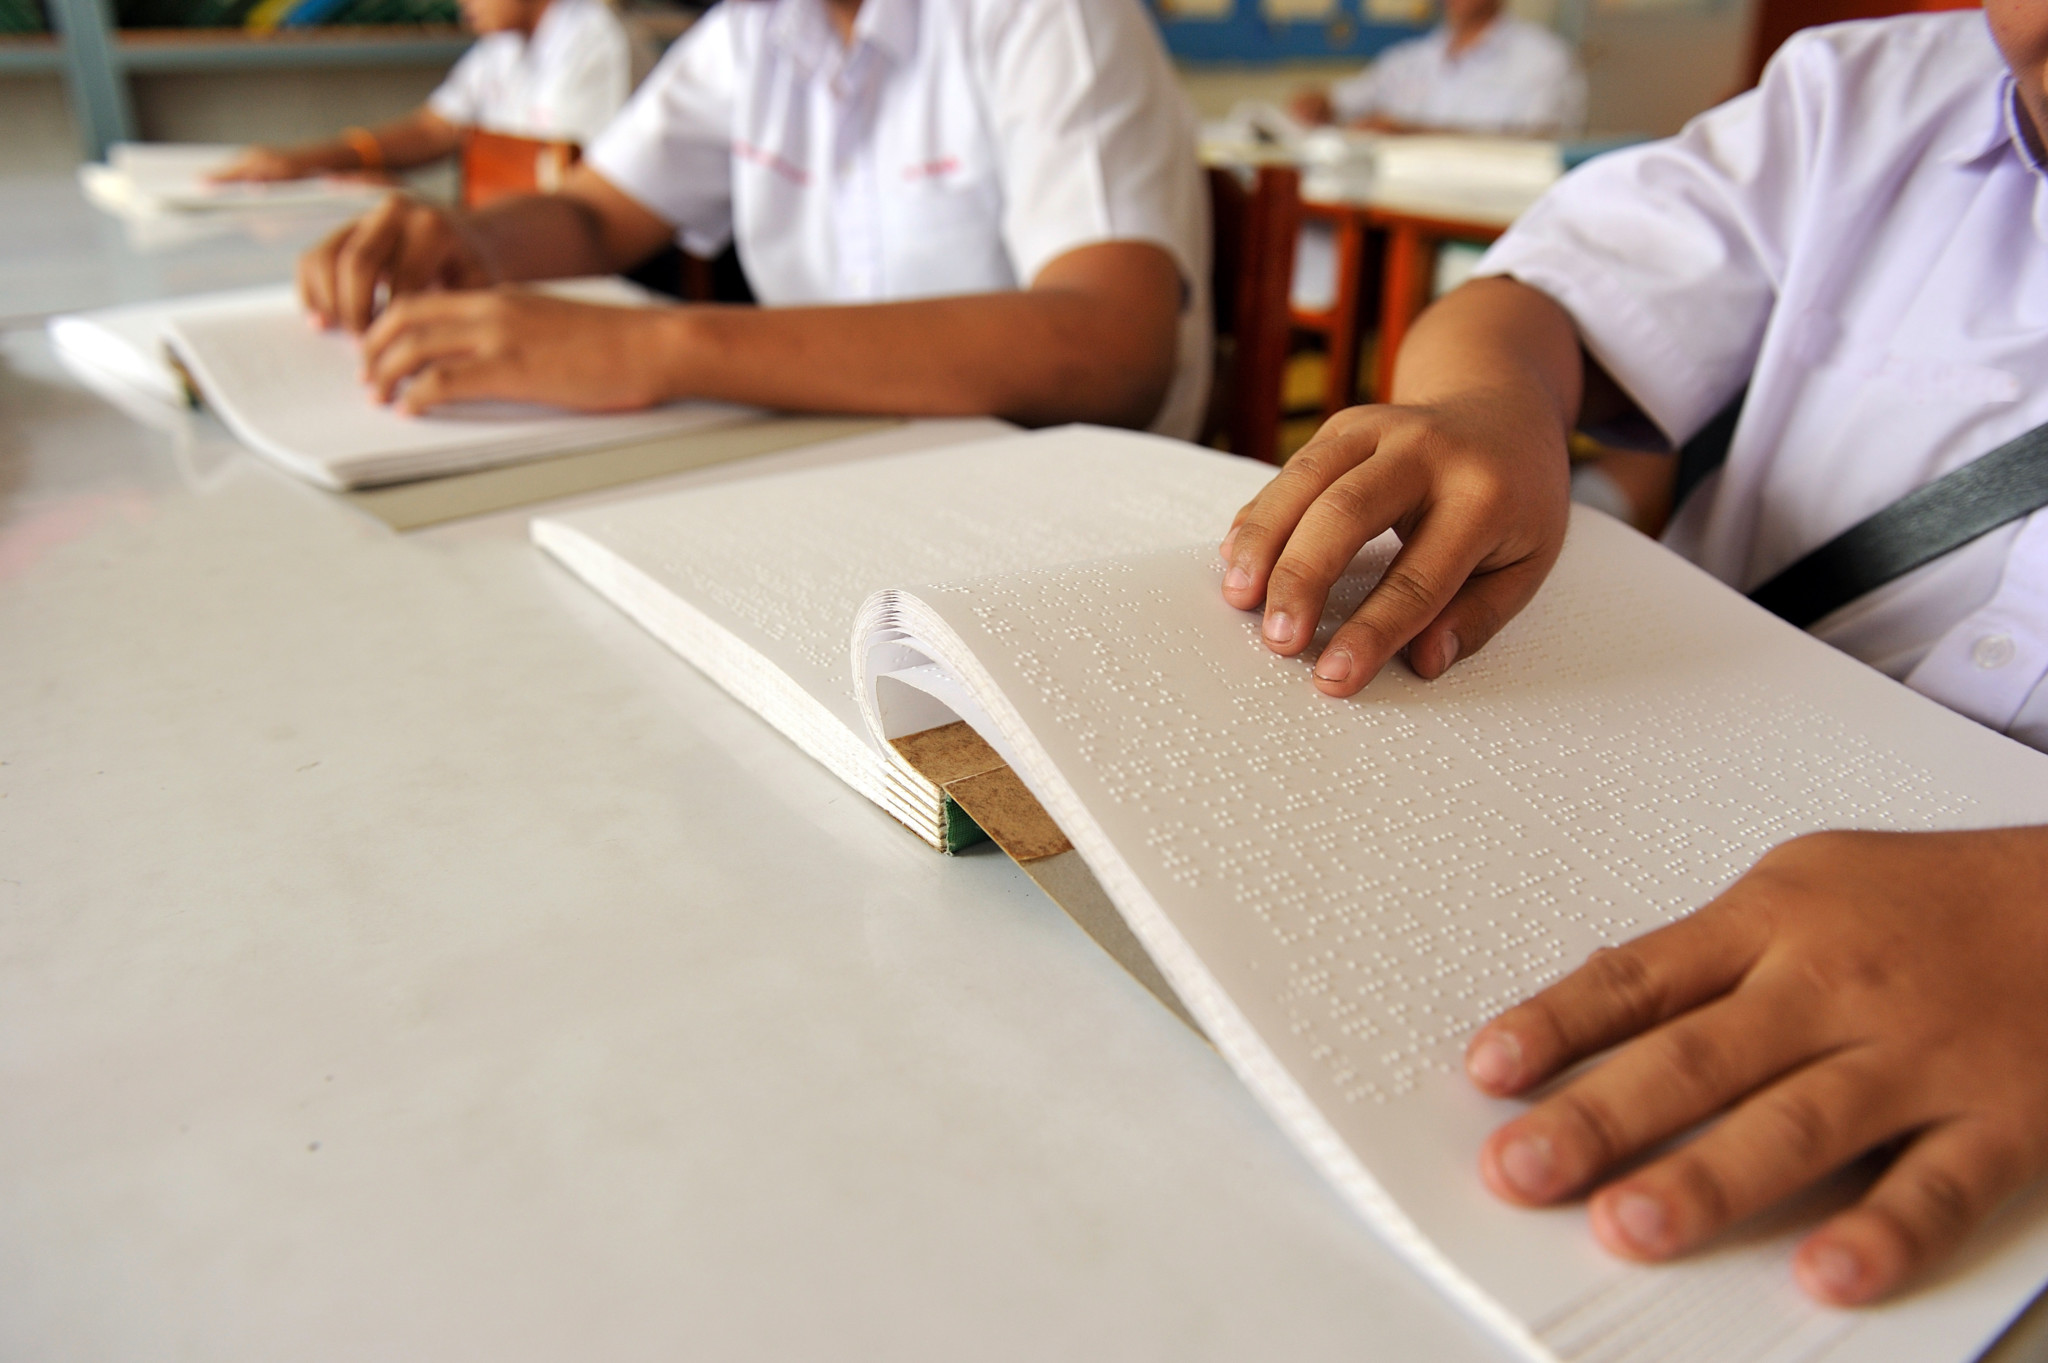 World Braille Day celebrates literacy, economic empowerment